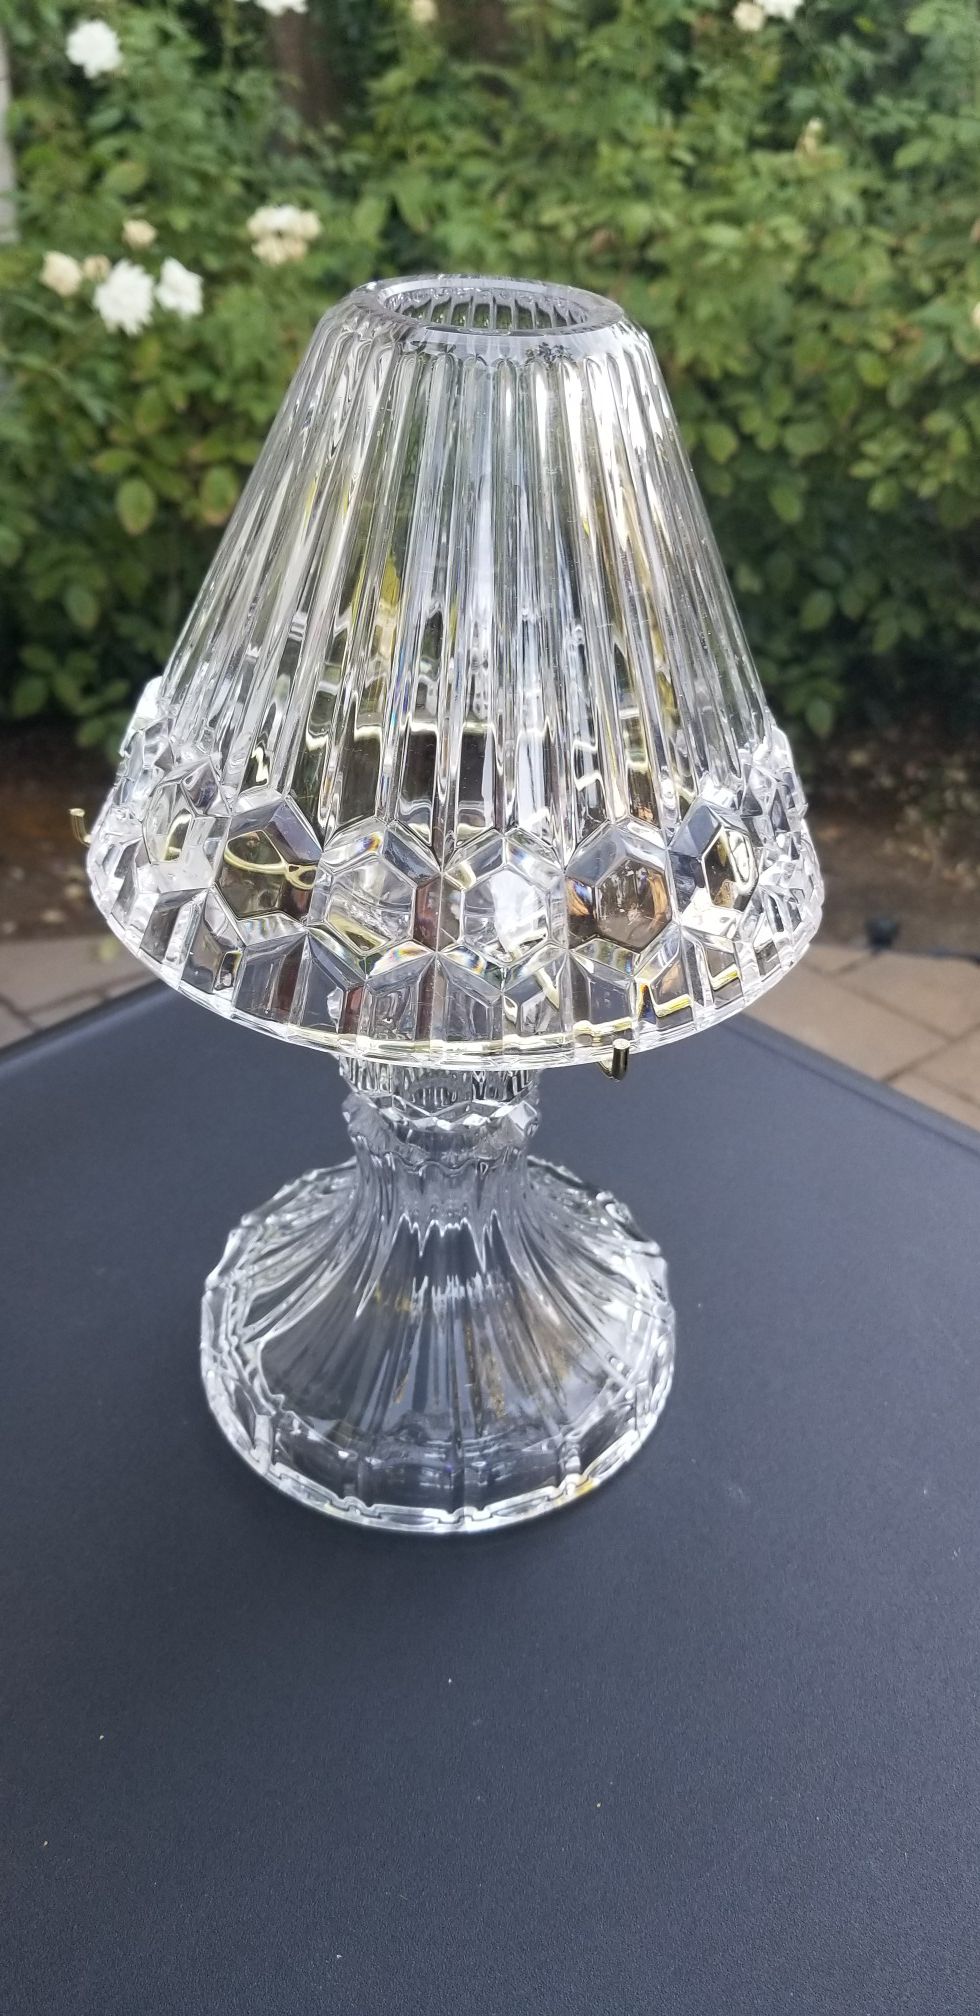 Princess House crystal lamp